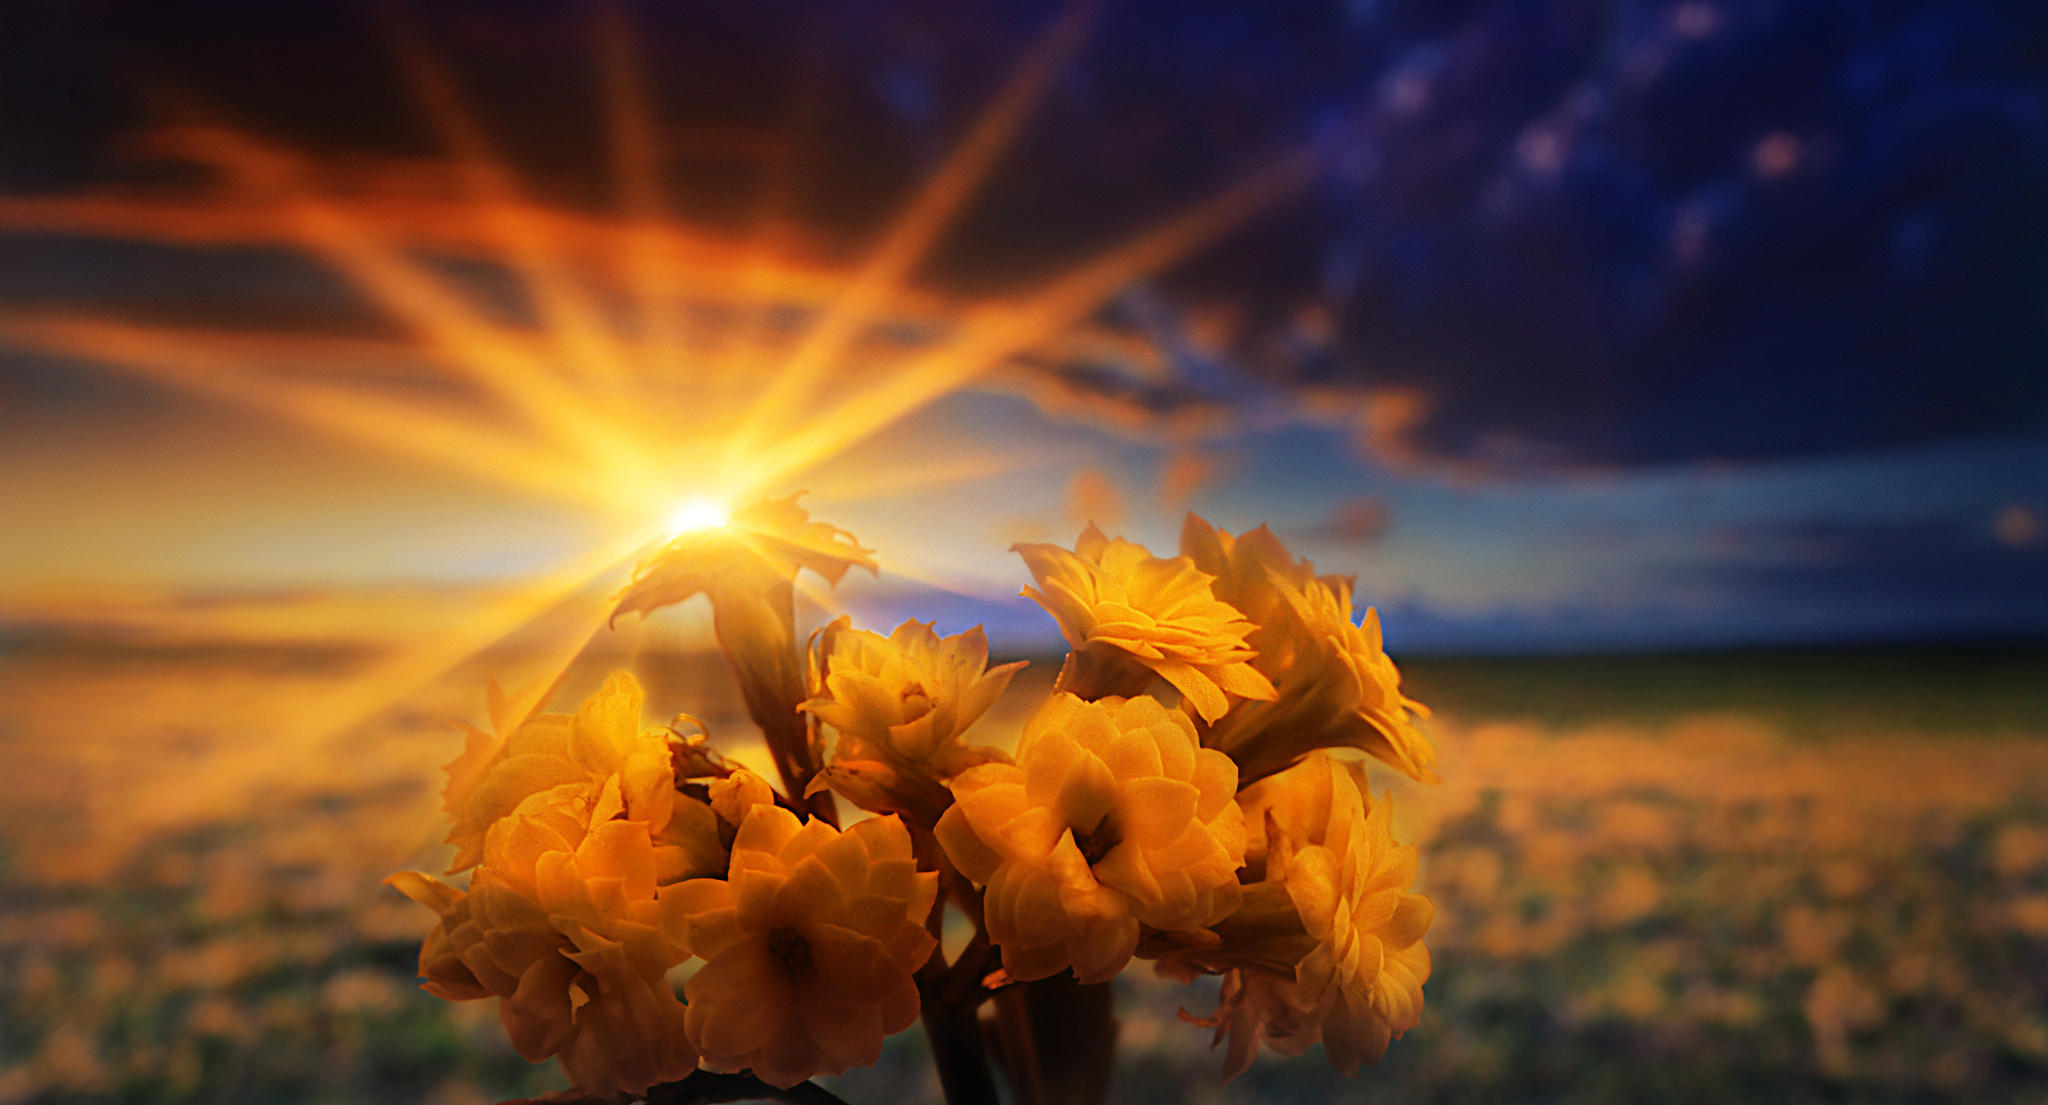 Flower sunset. Рассвет солнца. Солнечный цветок. Цветы в лучах солнца. Красивое солнце.